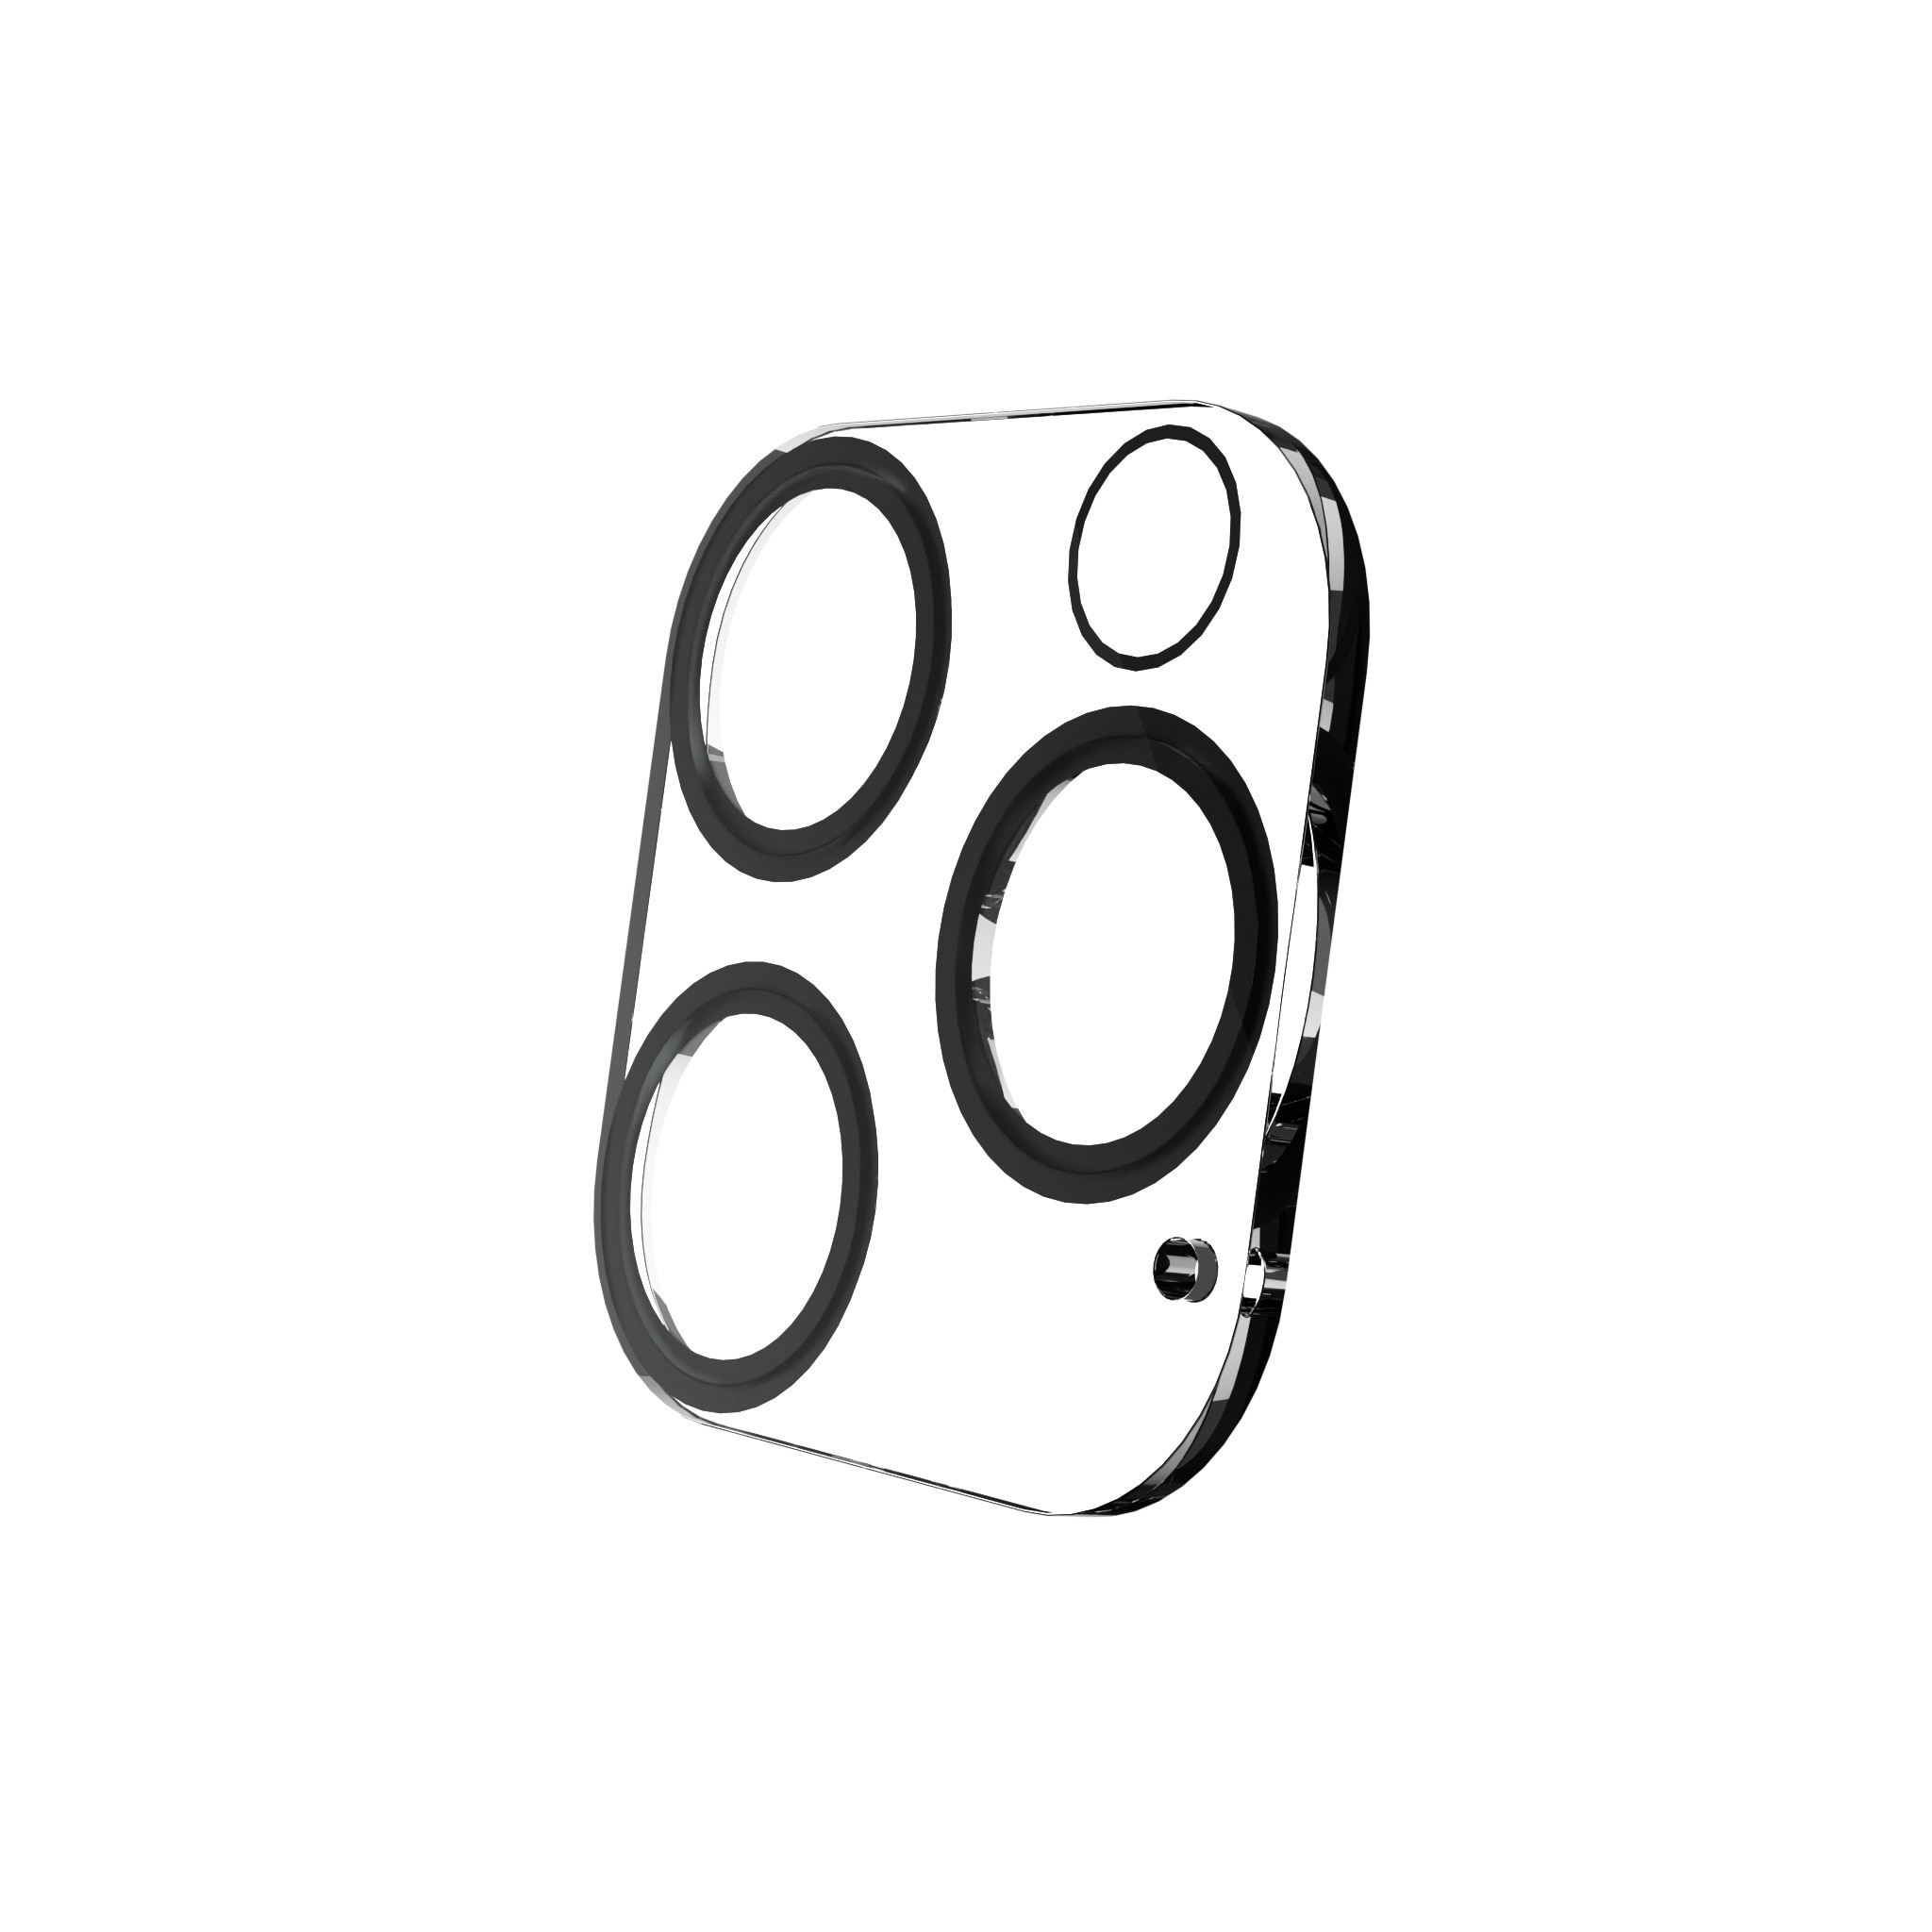 Panzerglas für Kamera Exoglass iPhone 15 Pro Max